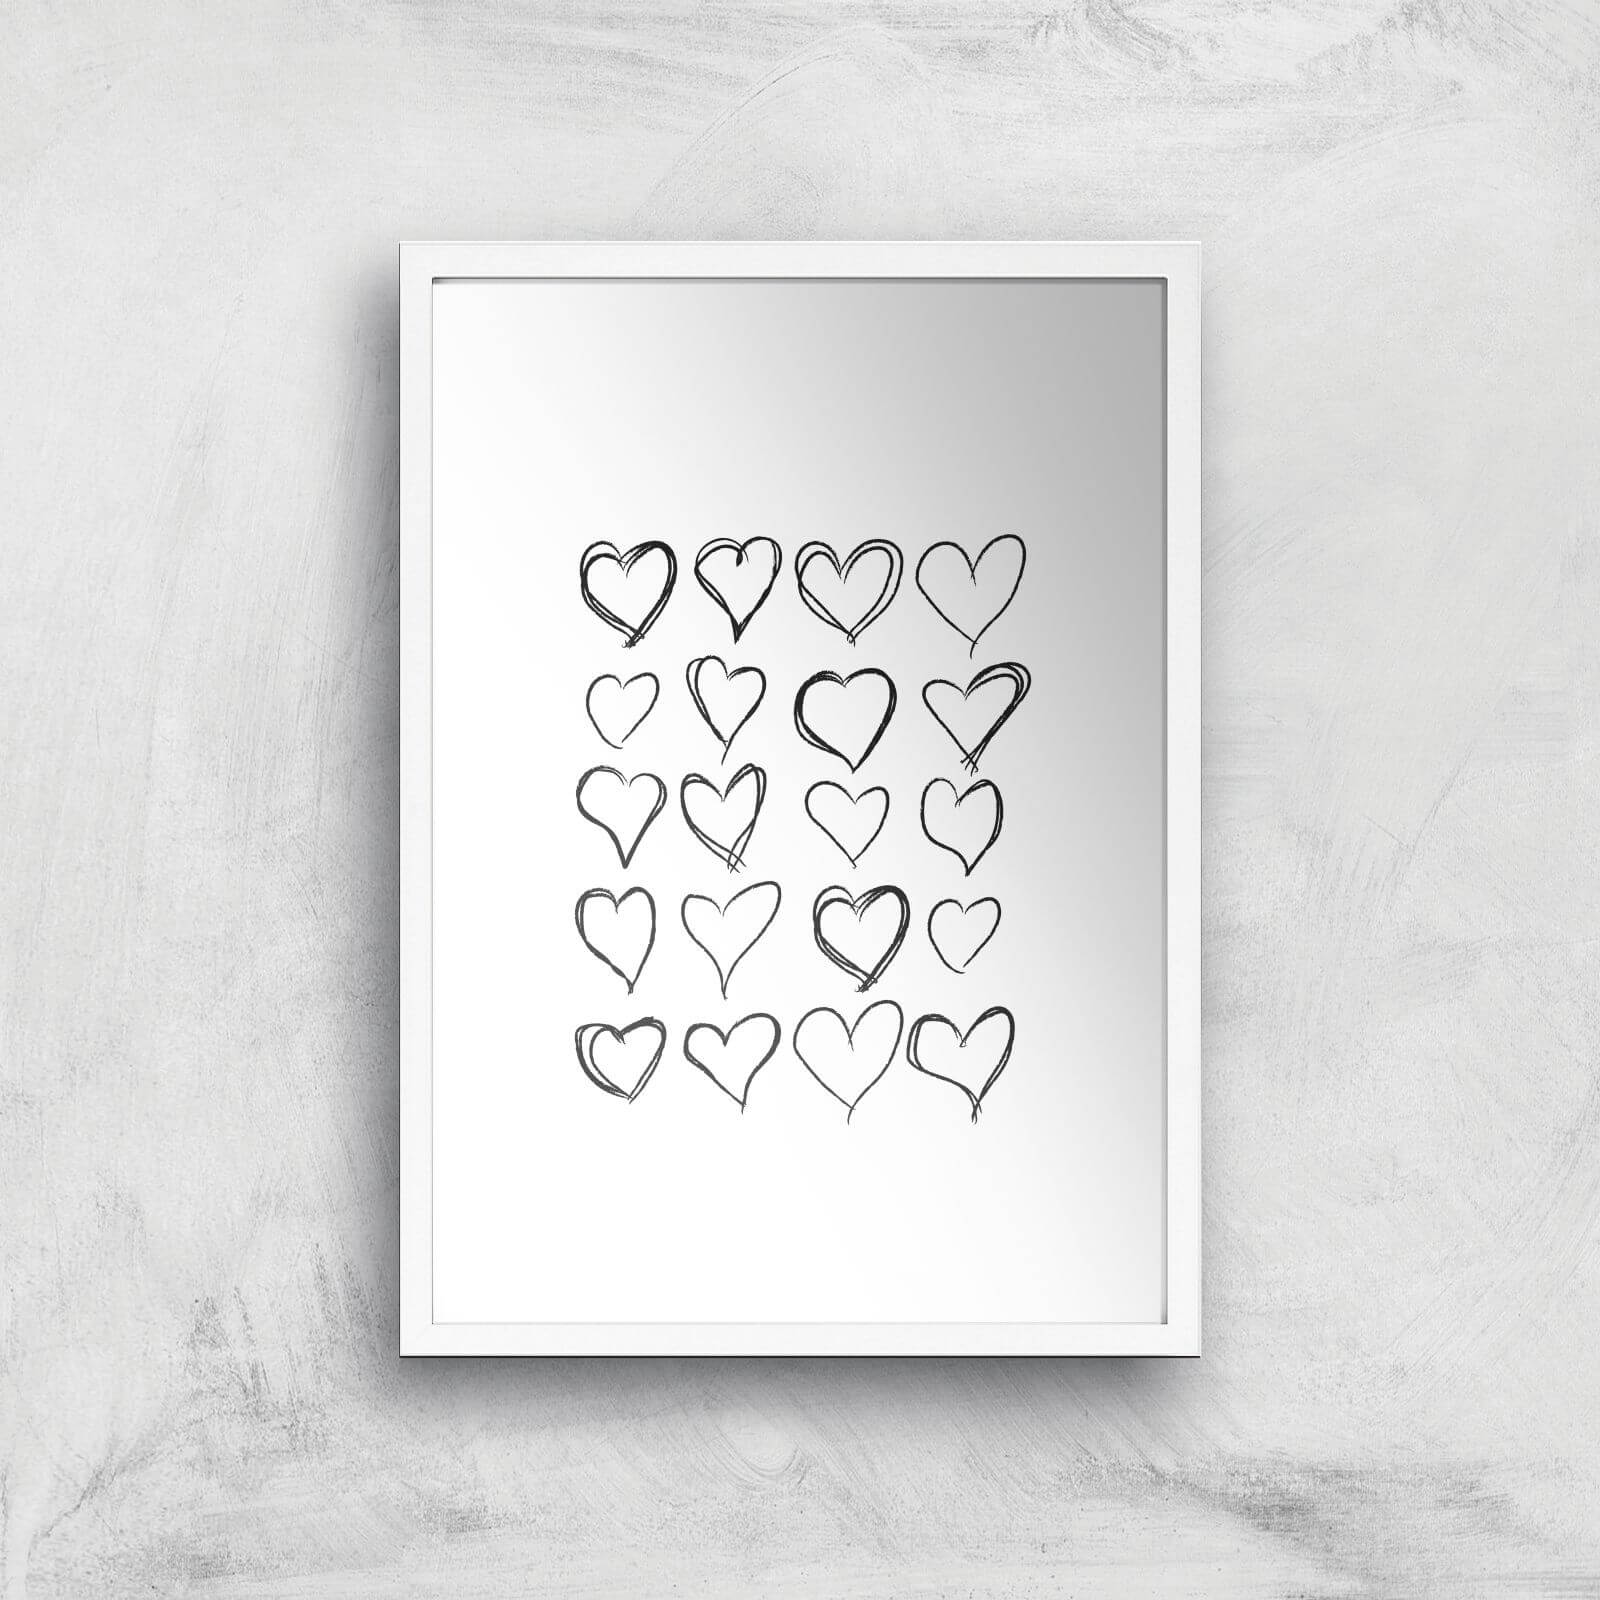 Love Hearts Giclee Art Print - A3 - White Frame